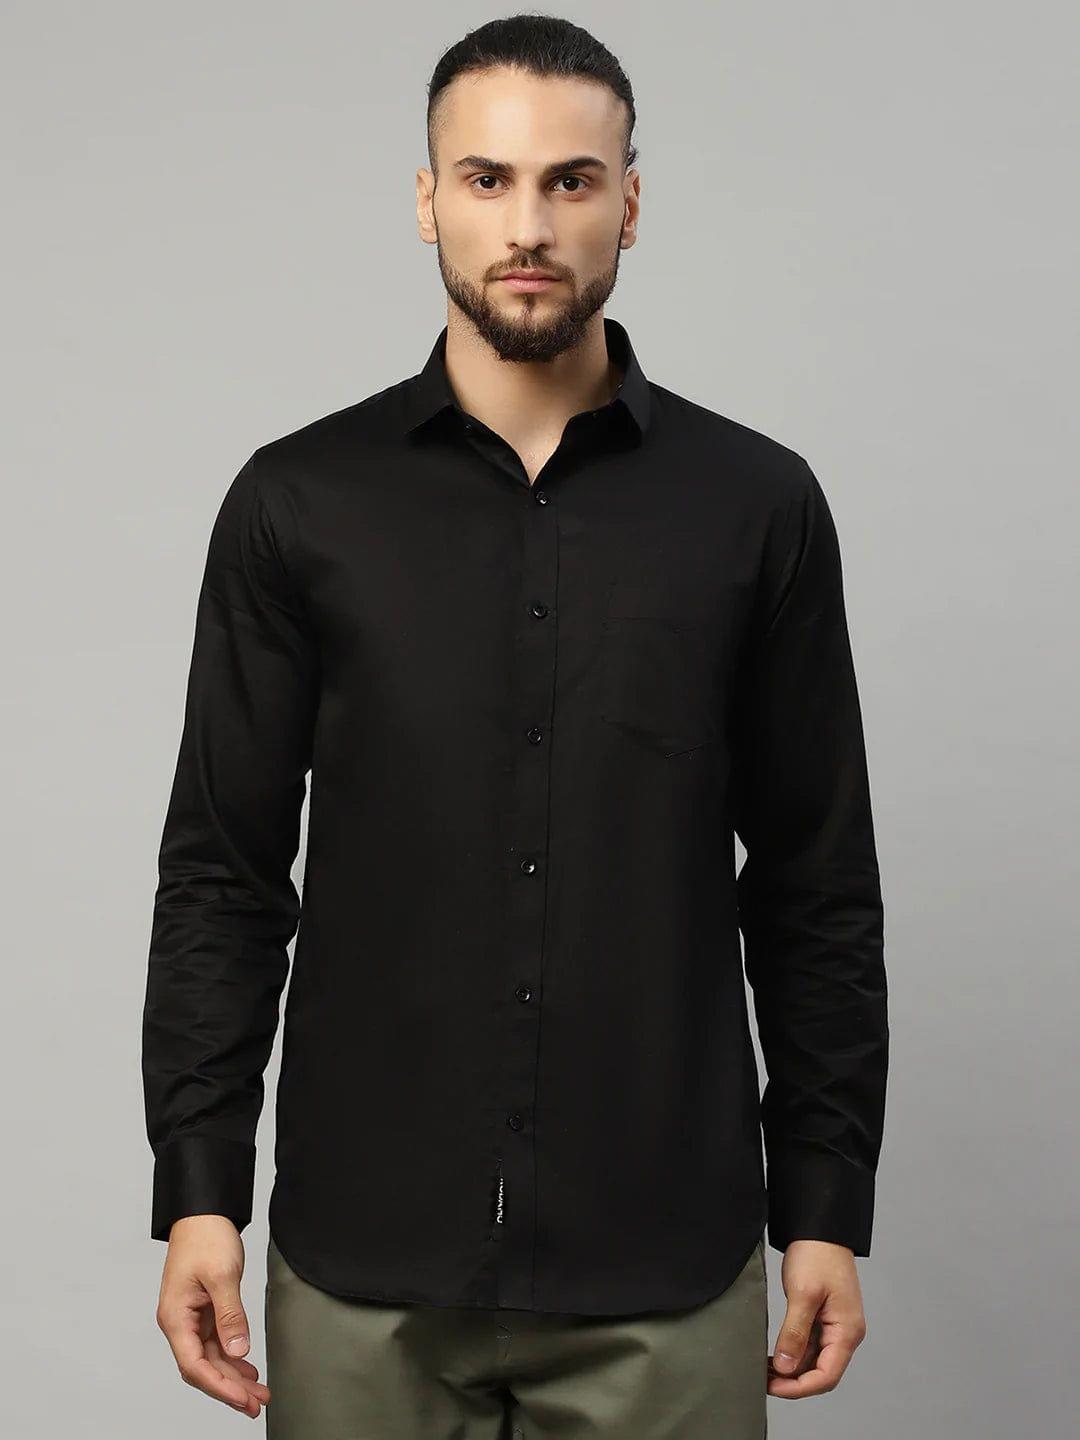 Rodamo  Men Black Slim Fit Casual Shirt